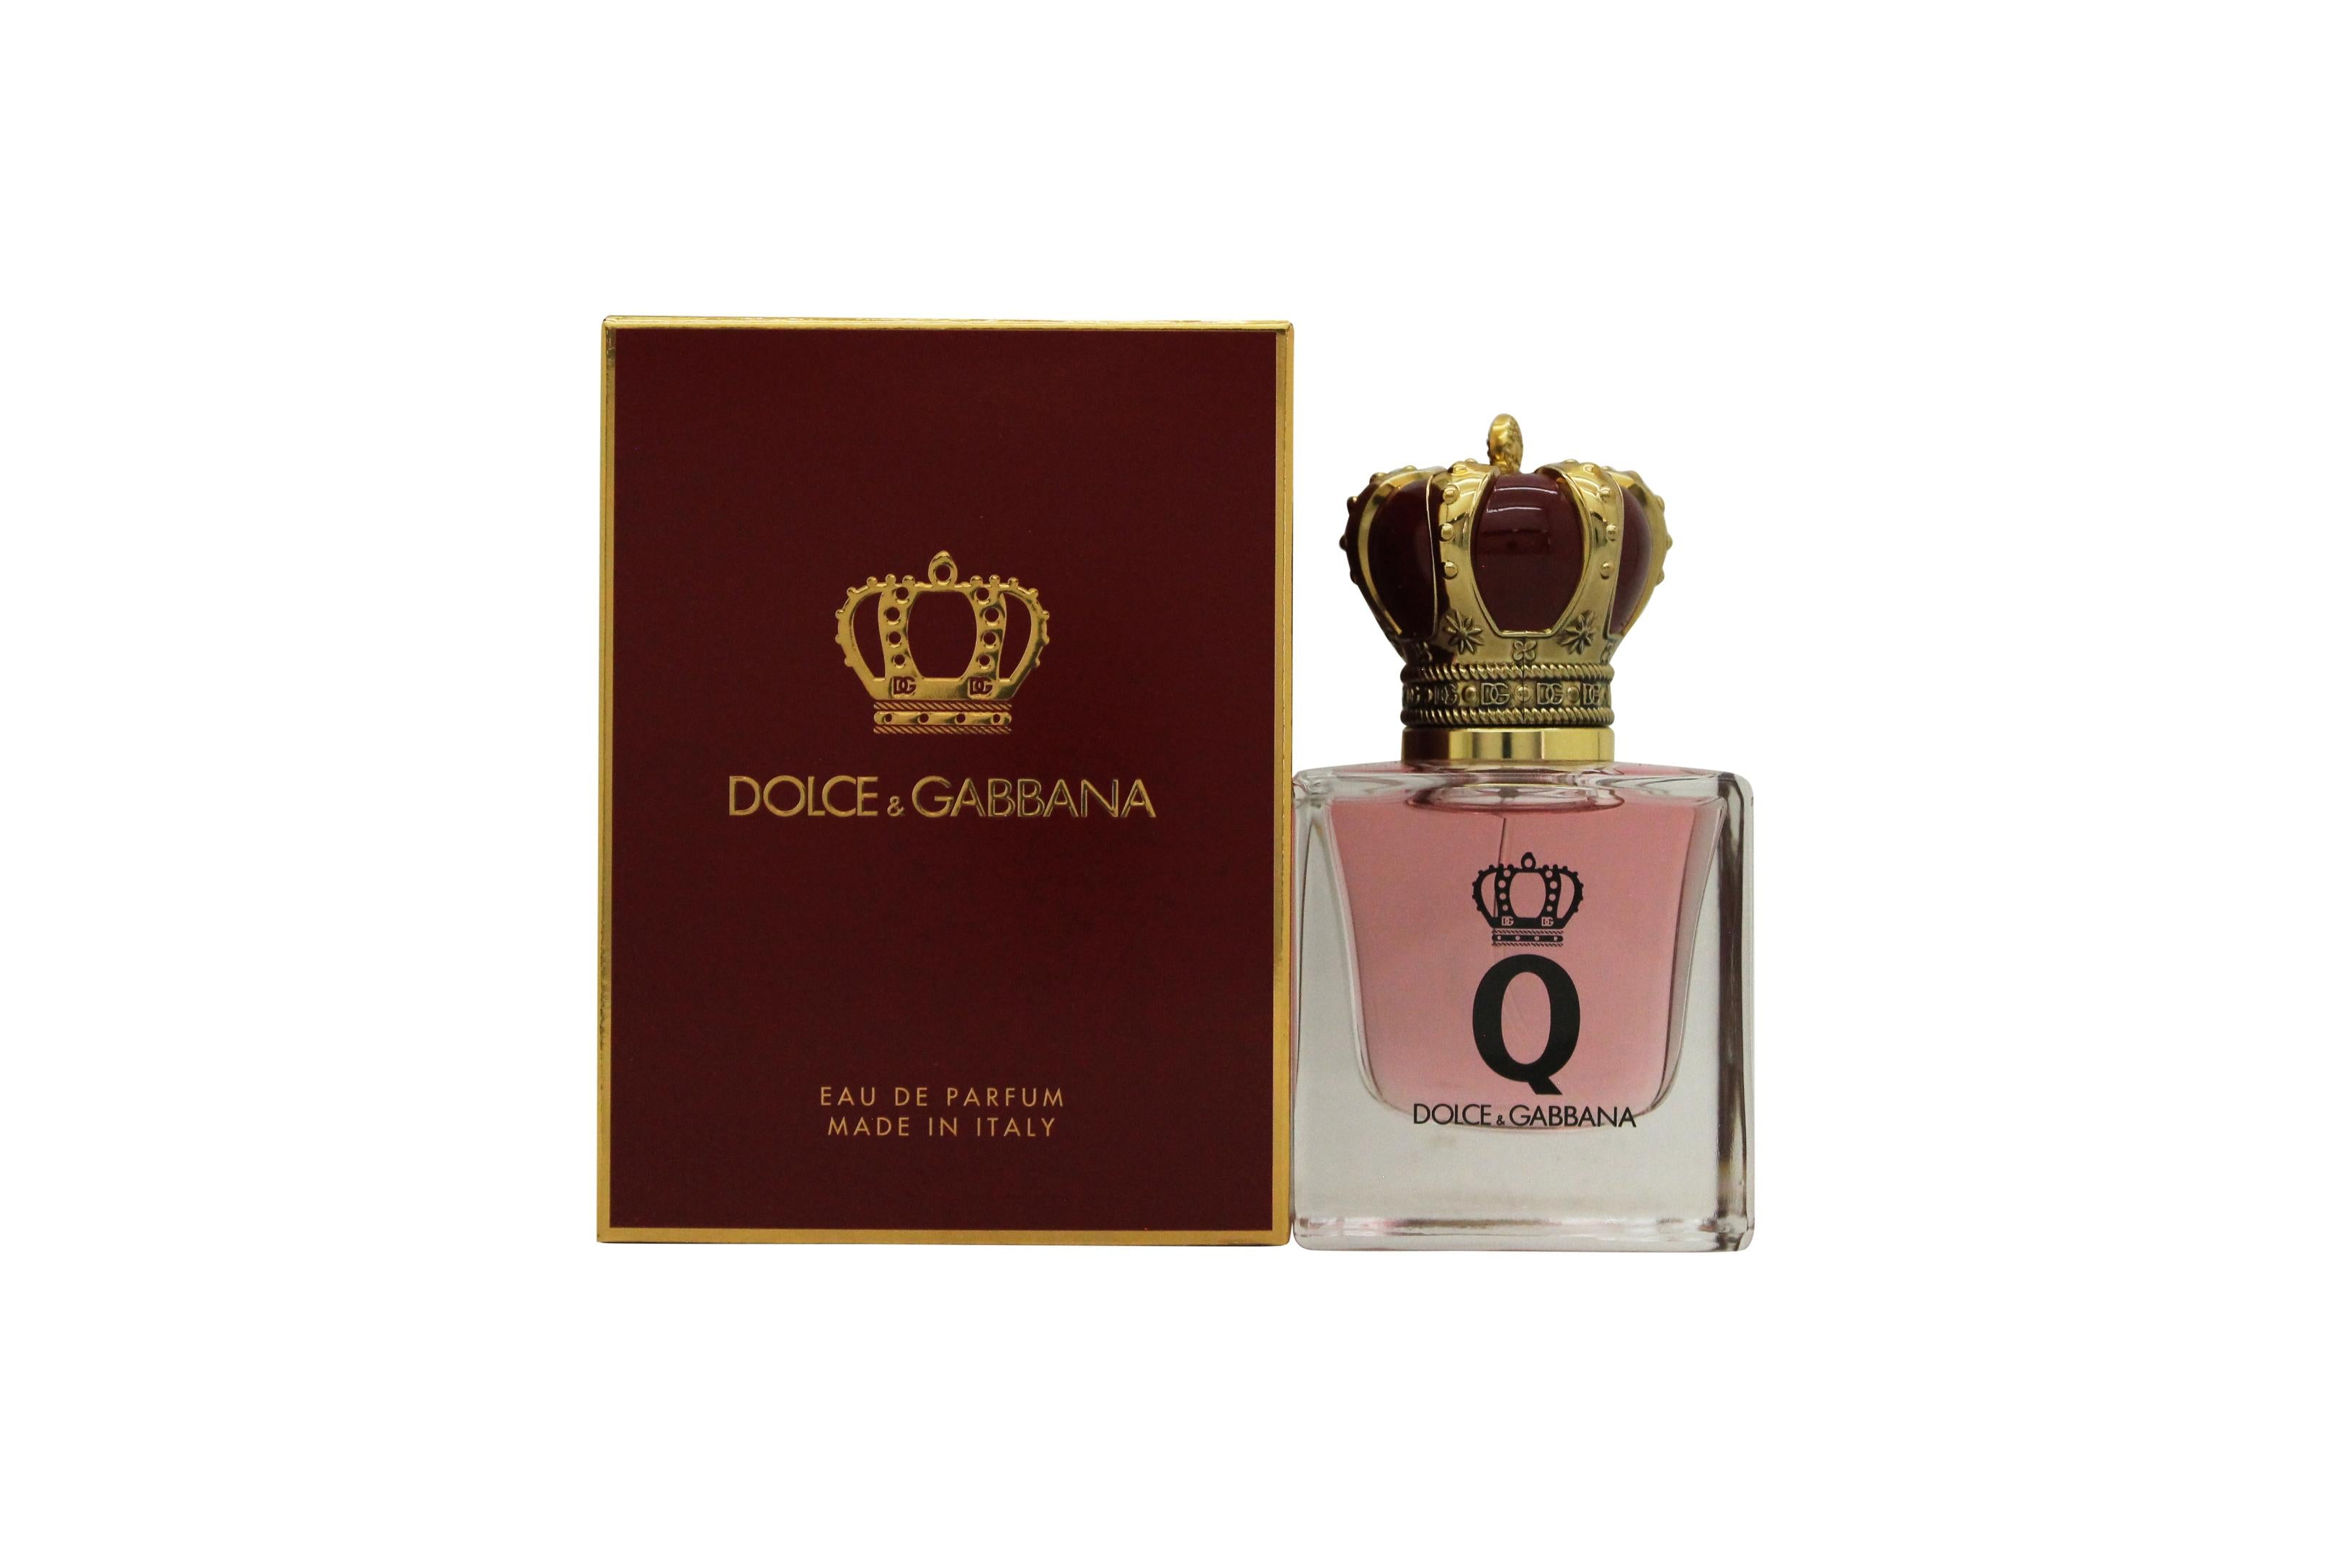 View Dolce Gabbana Q Eau de Parfum 30ml Spray information